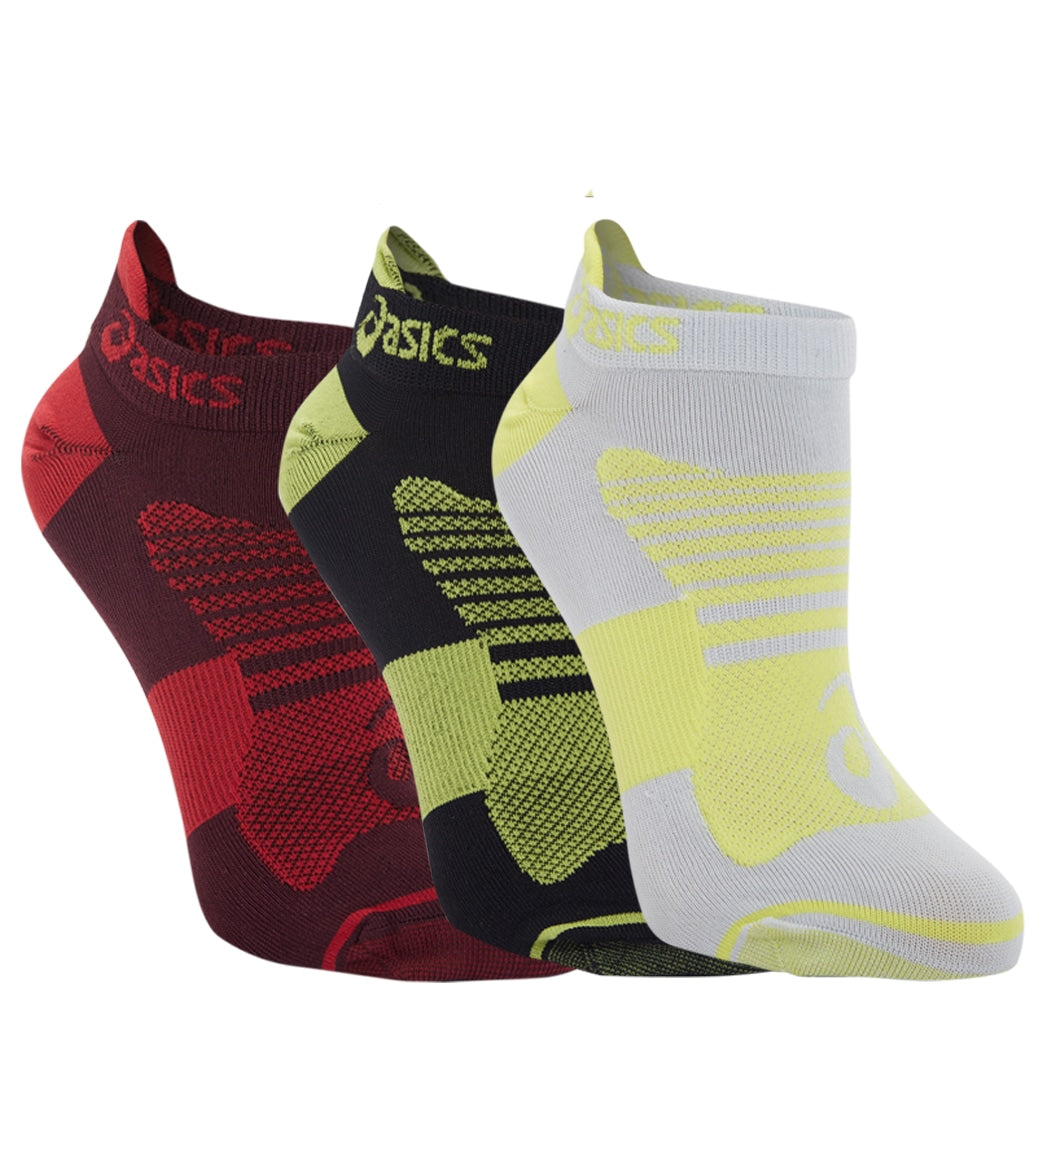 Asics Men's Quick Lyte Plus Socks 3 Pack - Deep Mars/Yuzu Pop Small Size Small - Swimoutlet.com